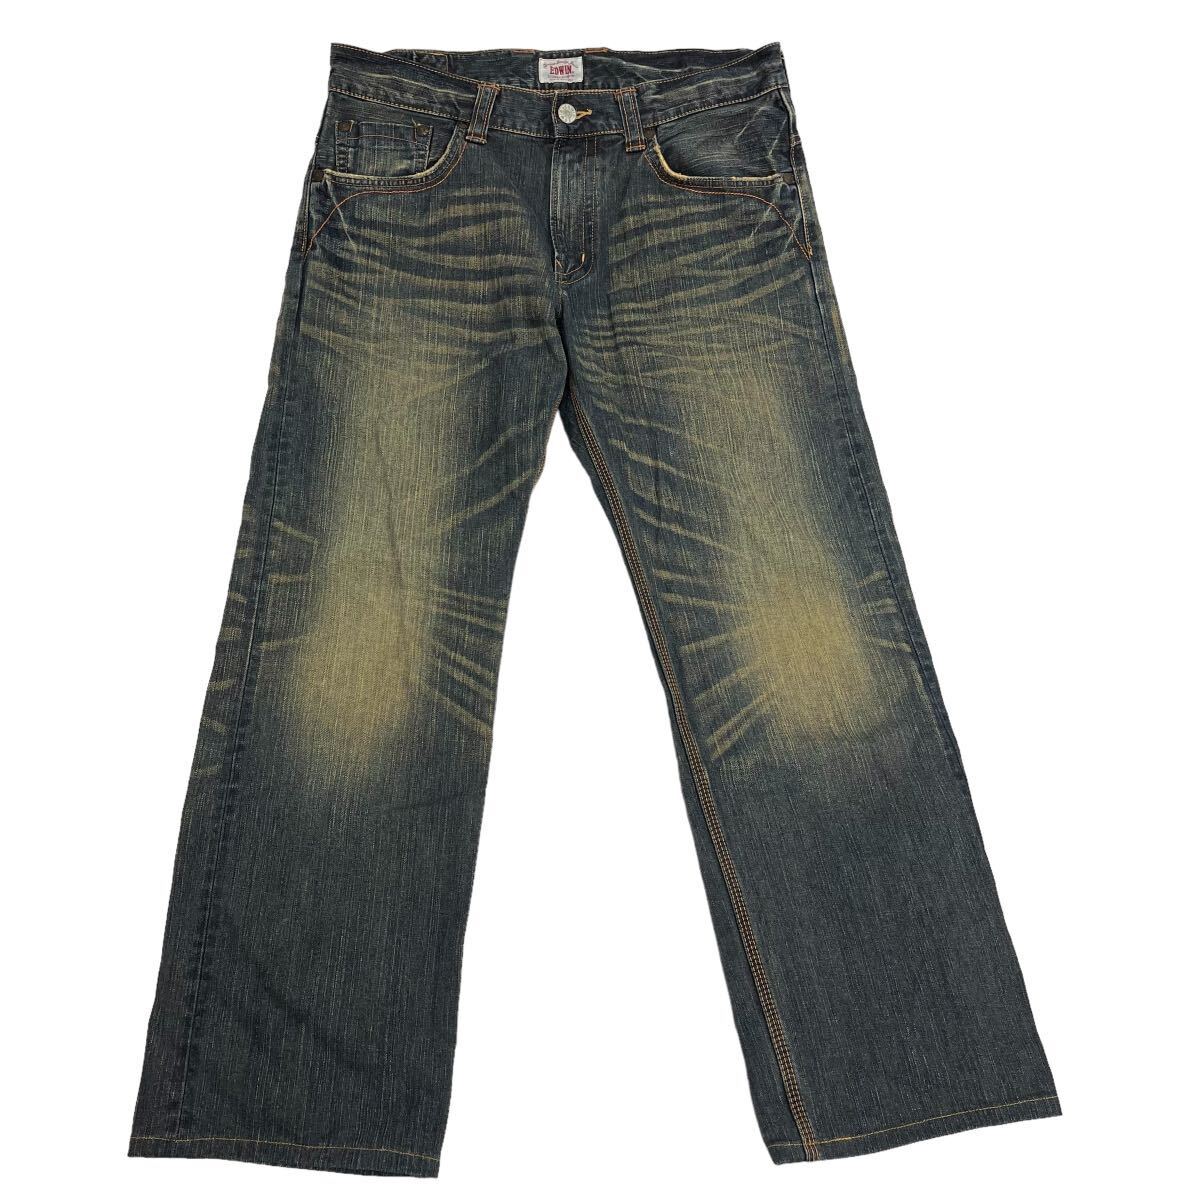 EDWIN / Edwin 424XVS strut Denim jeans pants large size W36 indigo ( used processing ) orange stitch O-2100